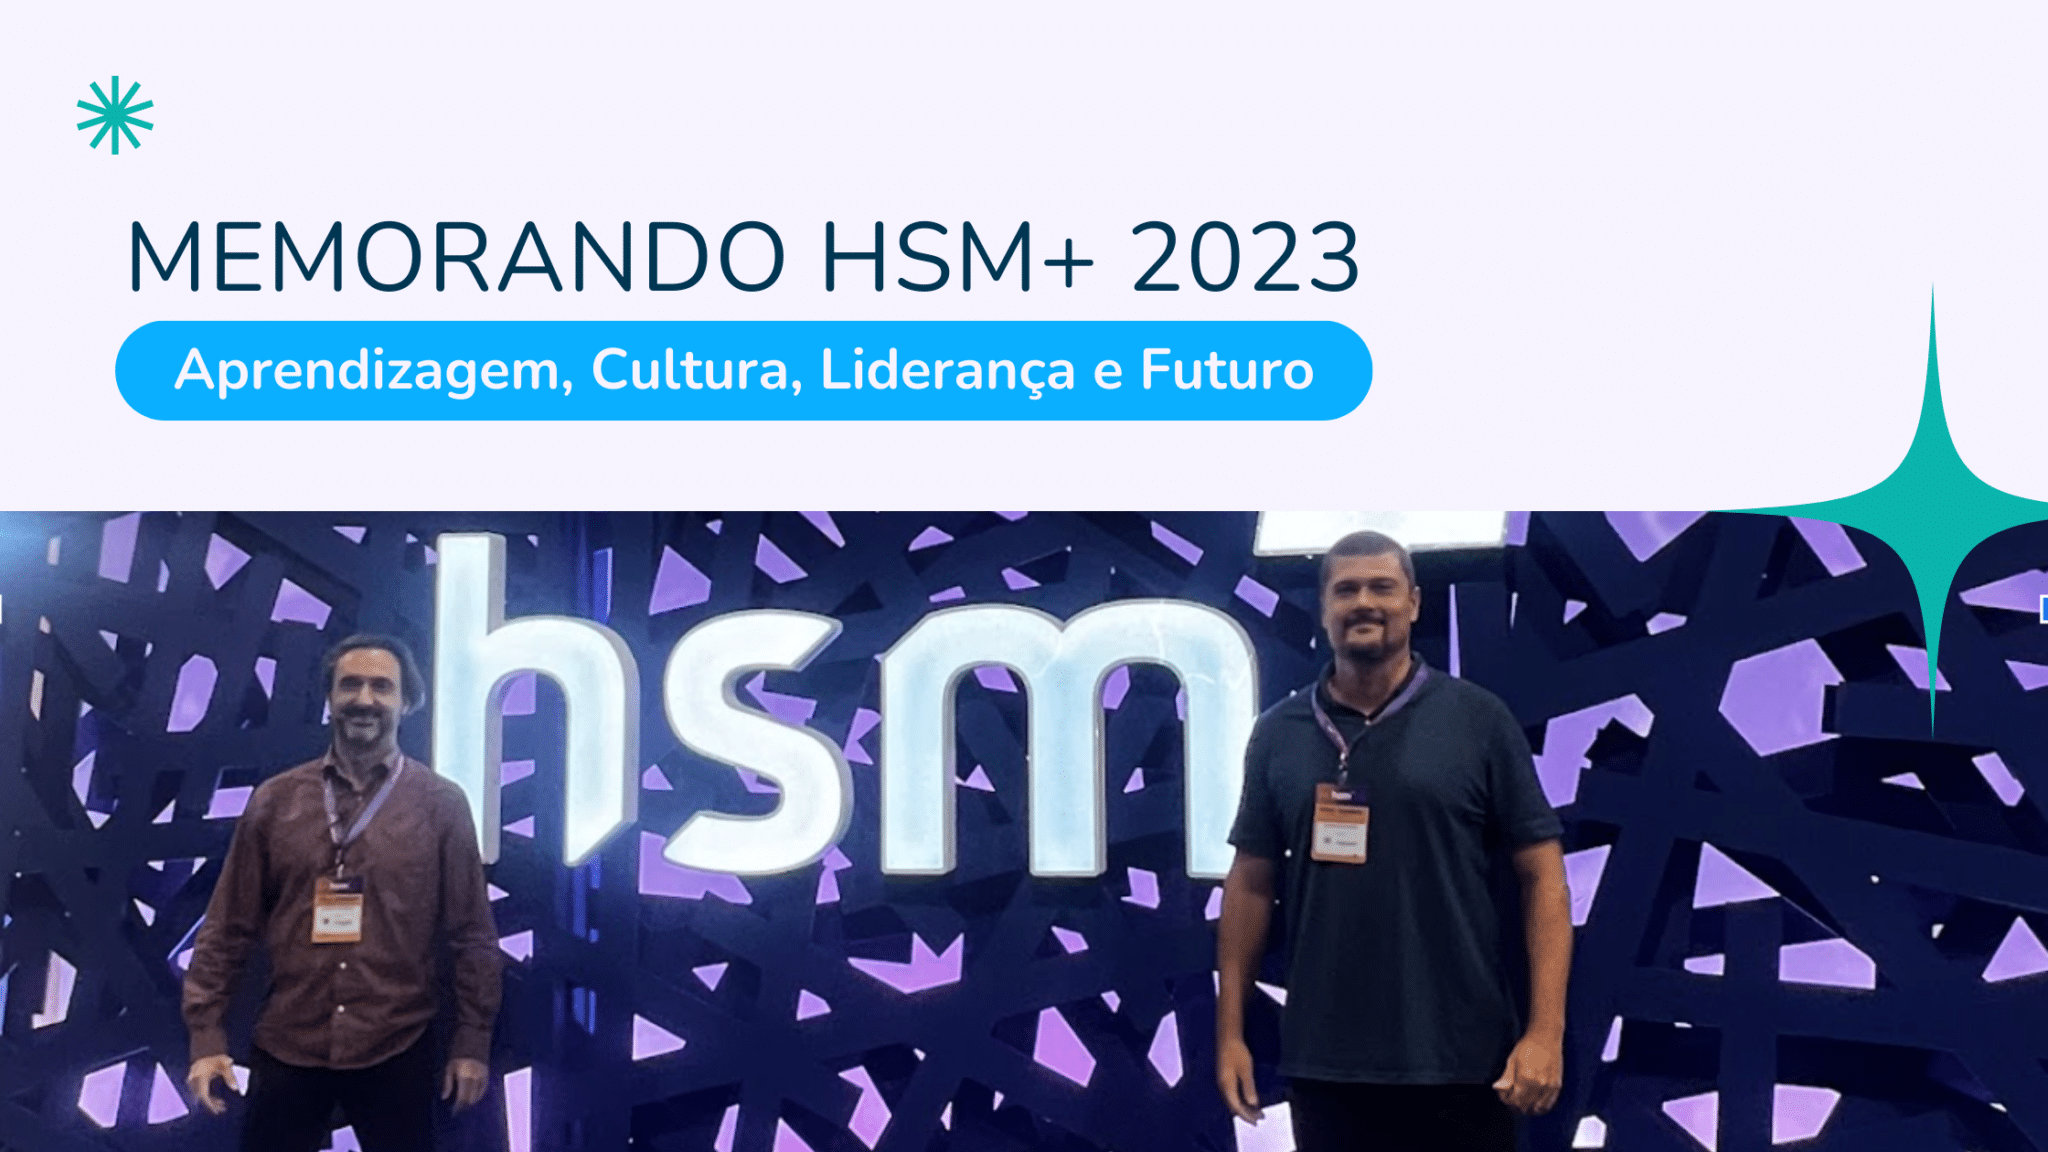 HSM+ 2023: Aprendizagem, Cultura, Liderança e Futuro